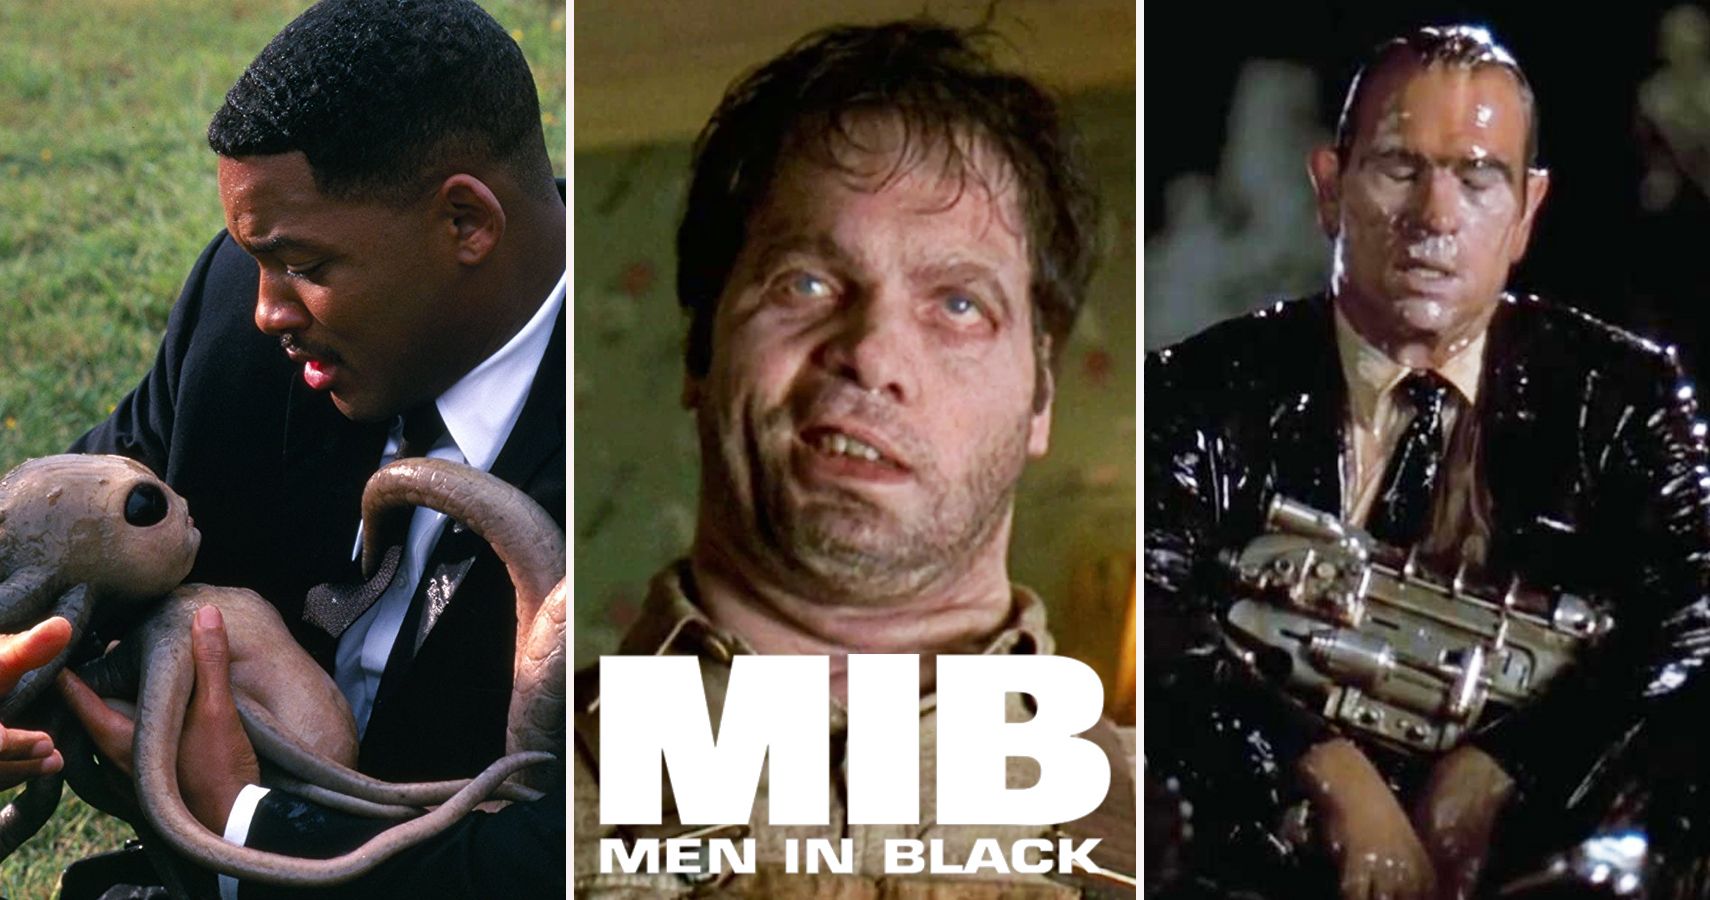 Analysis Of The Film Men In Black